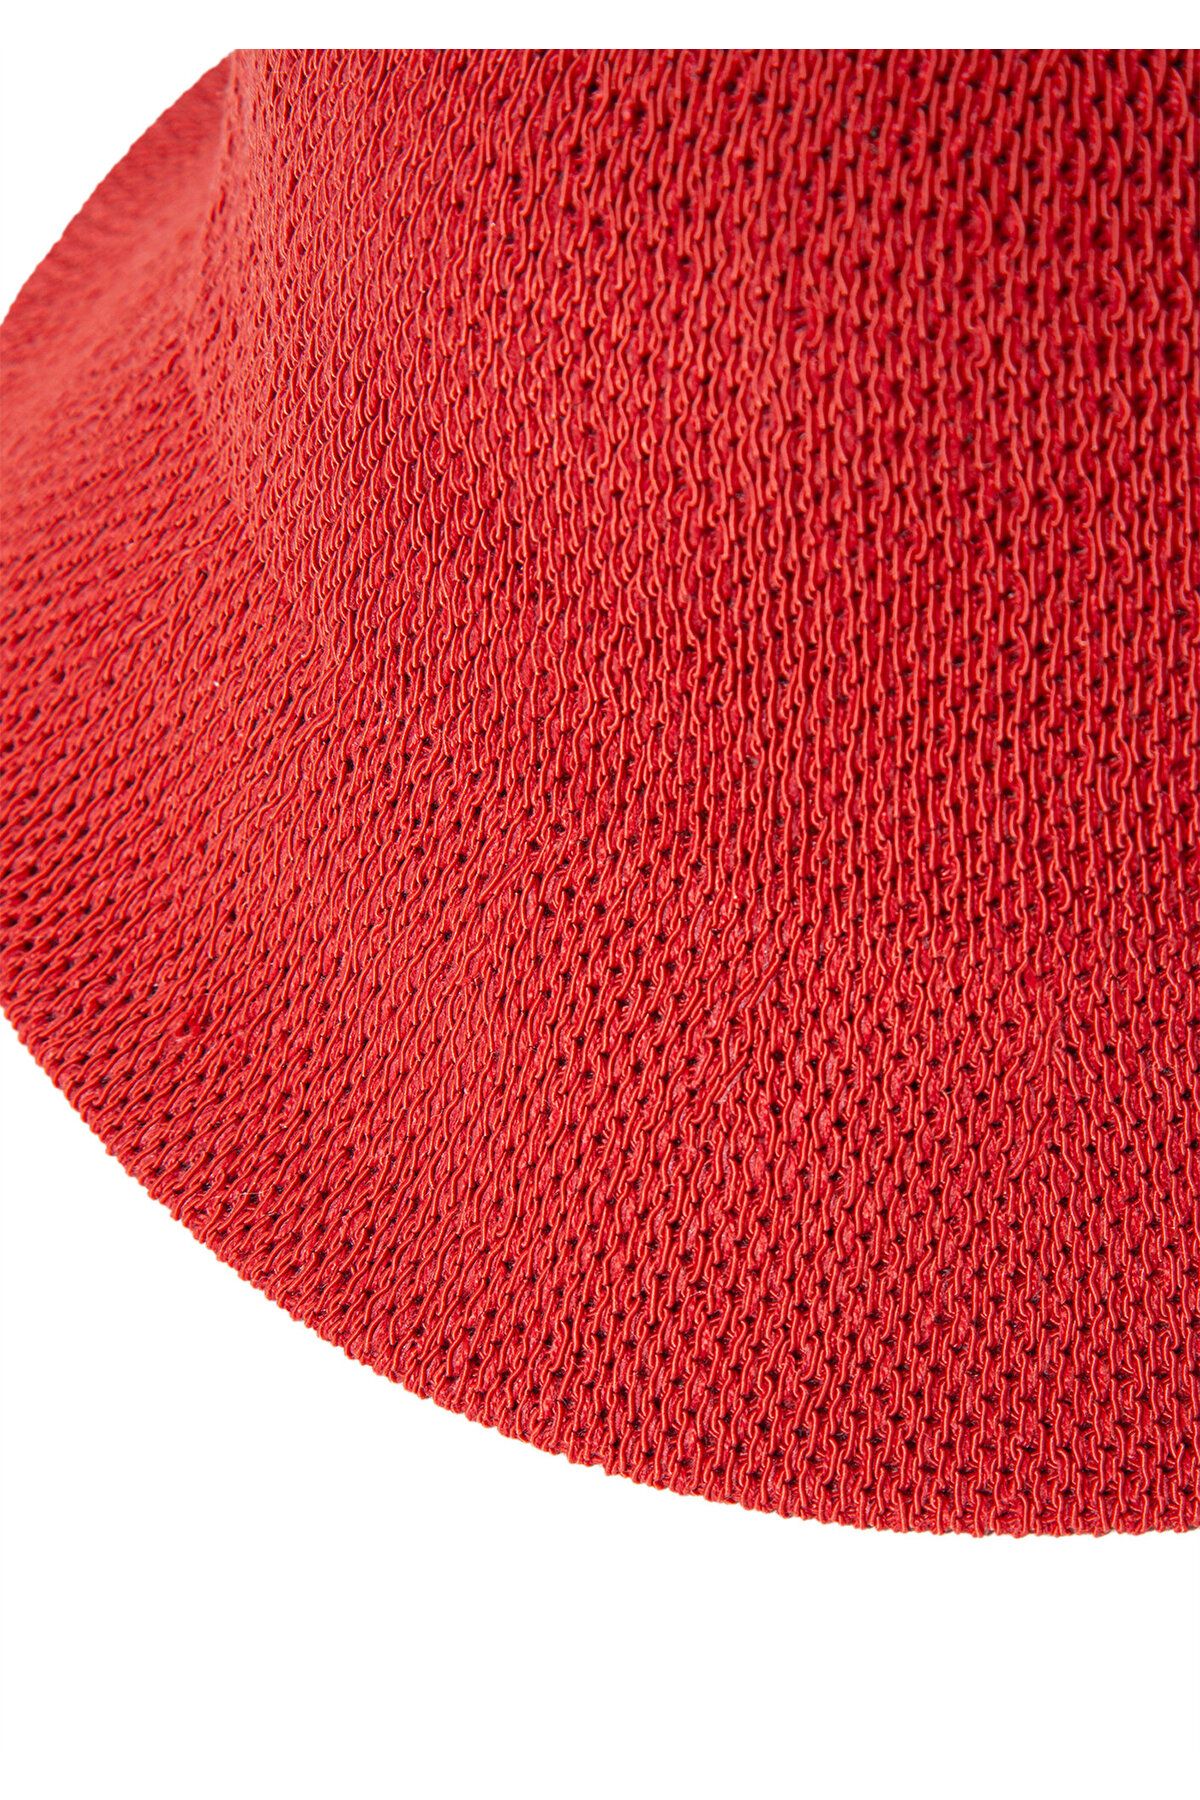 Mavi Red Hat 1910080-86417